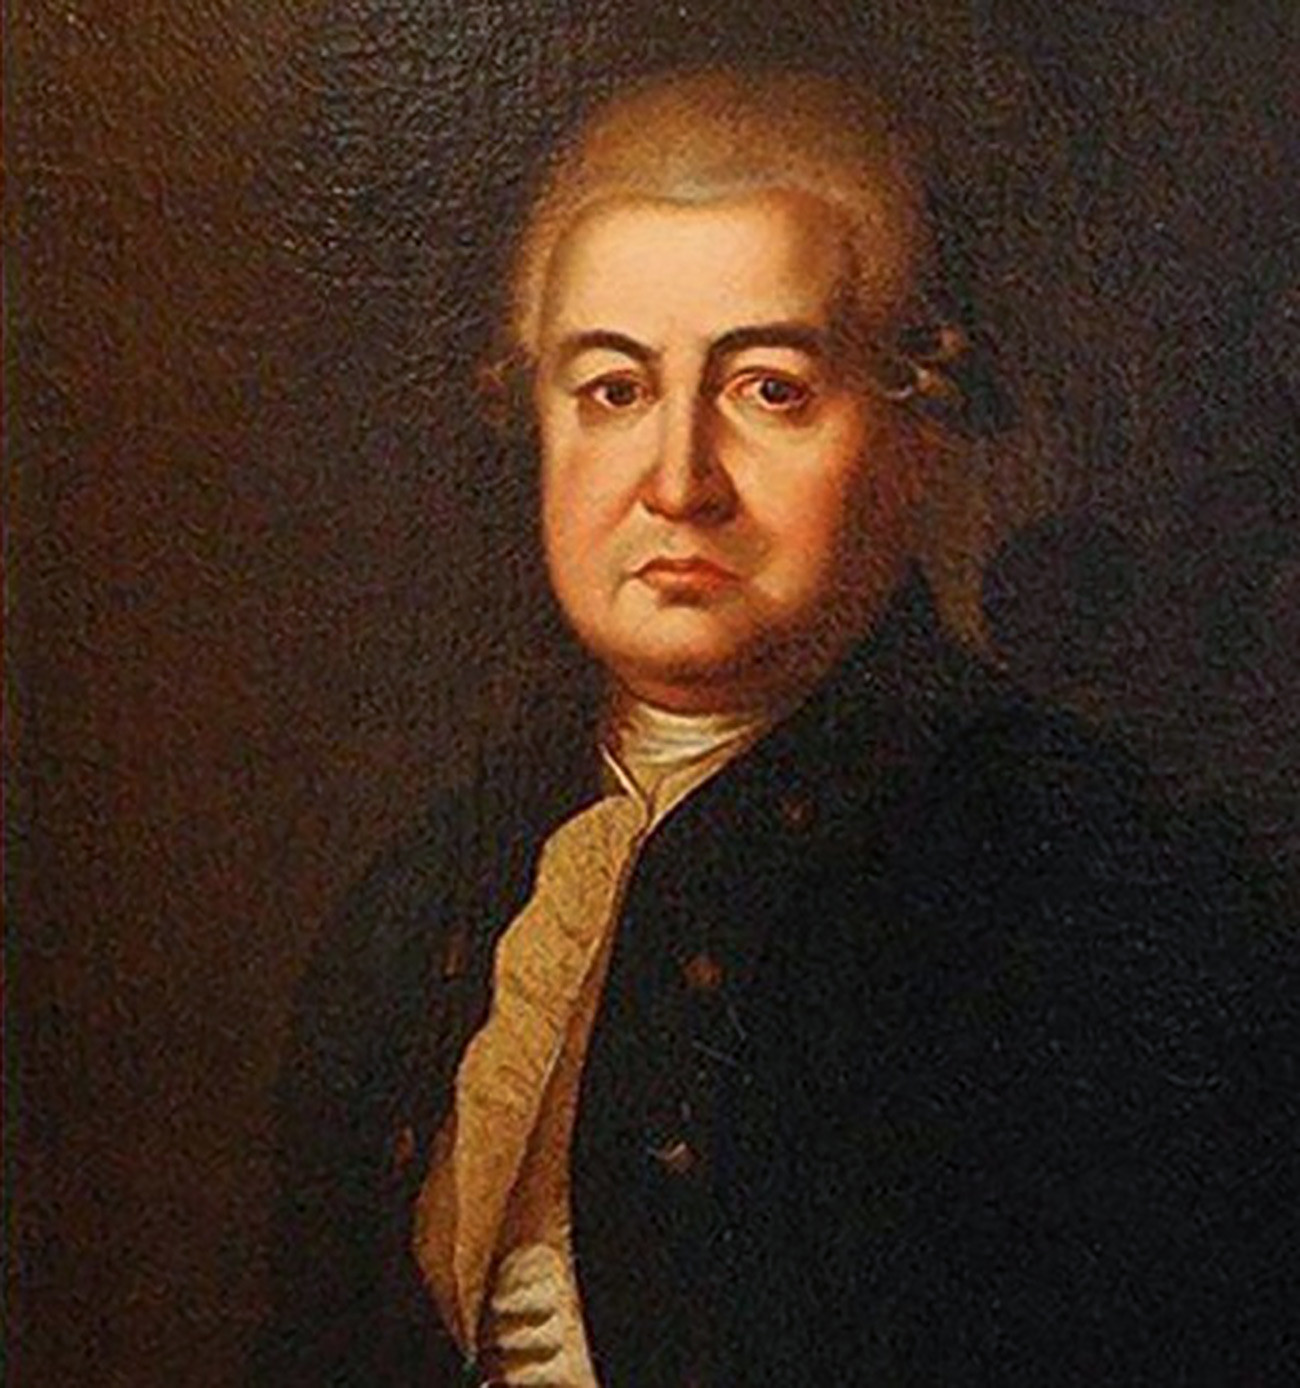 Николай Андреевич Тютчев